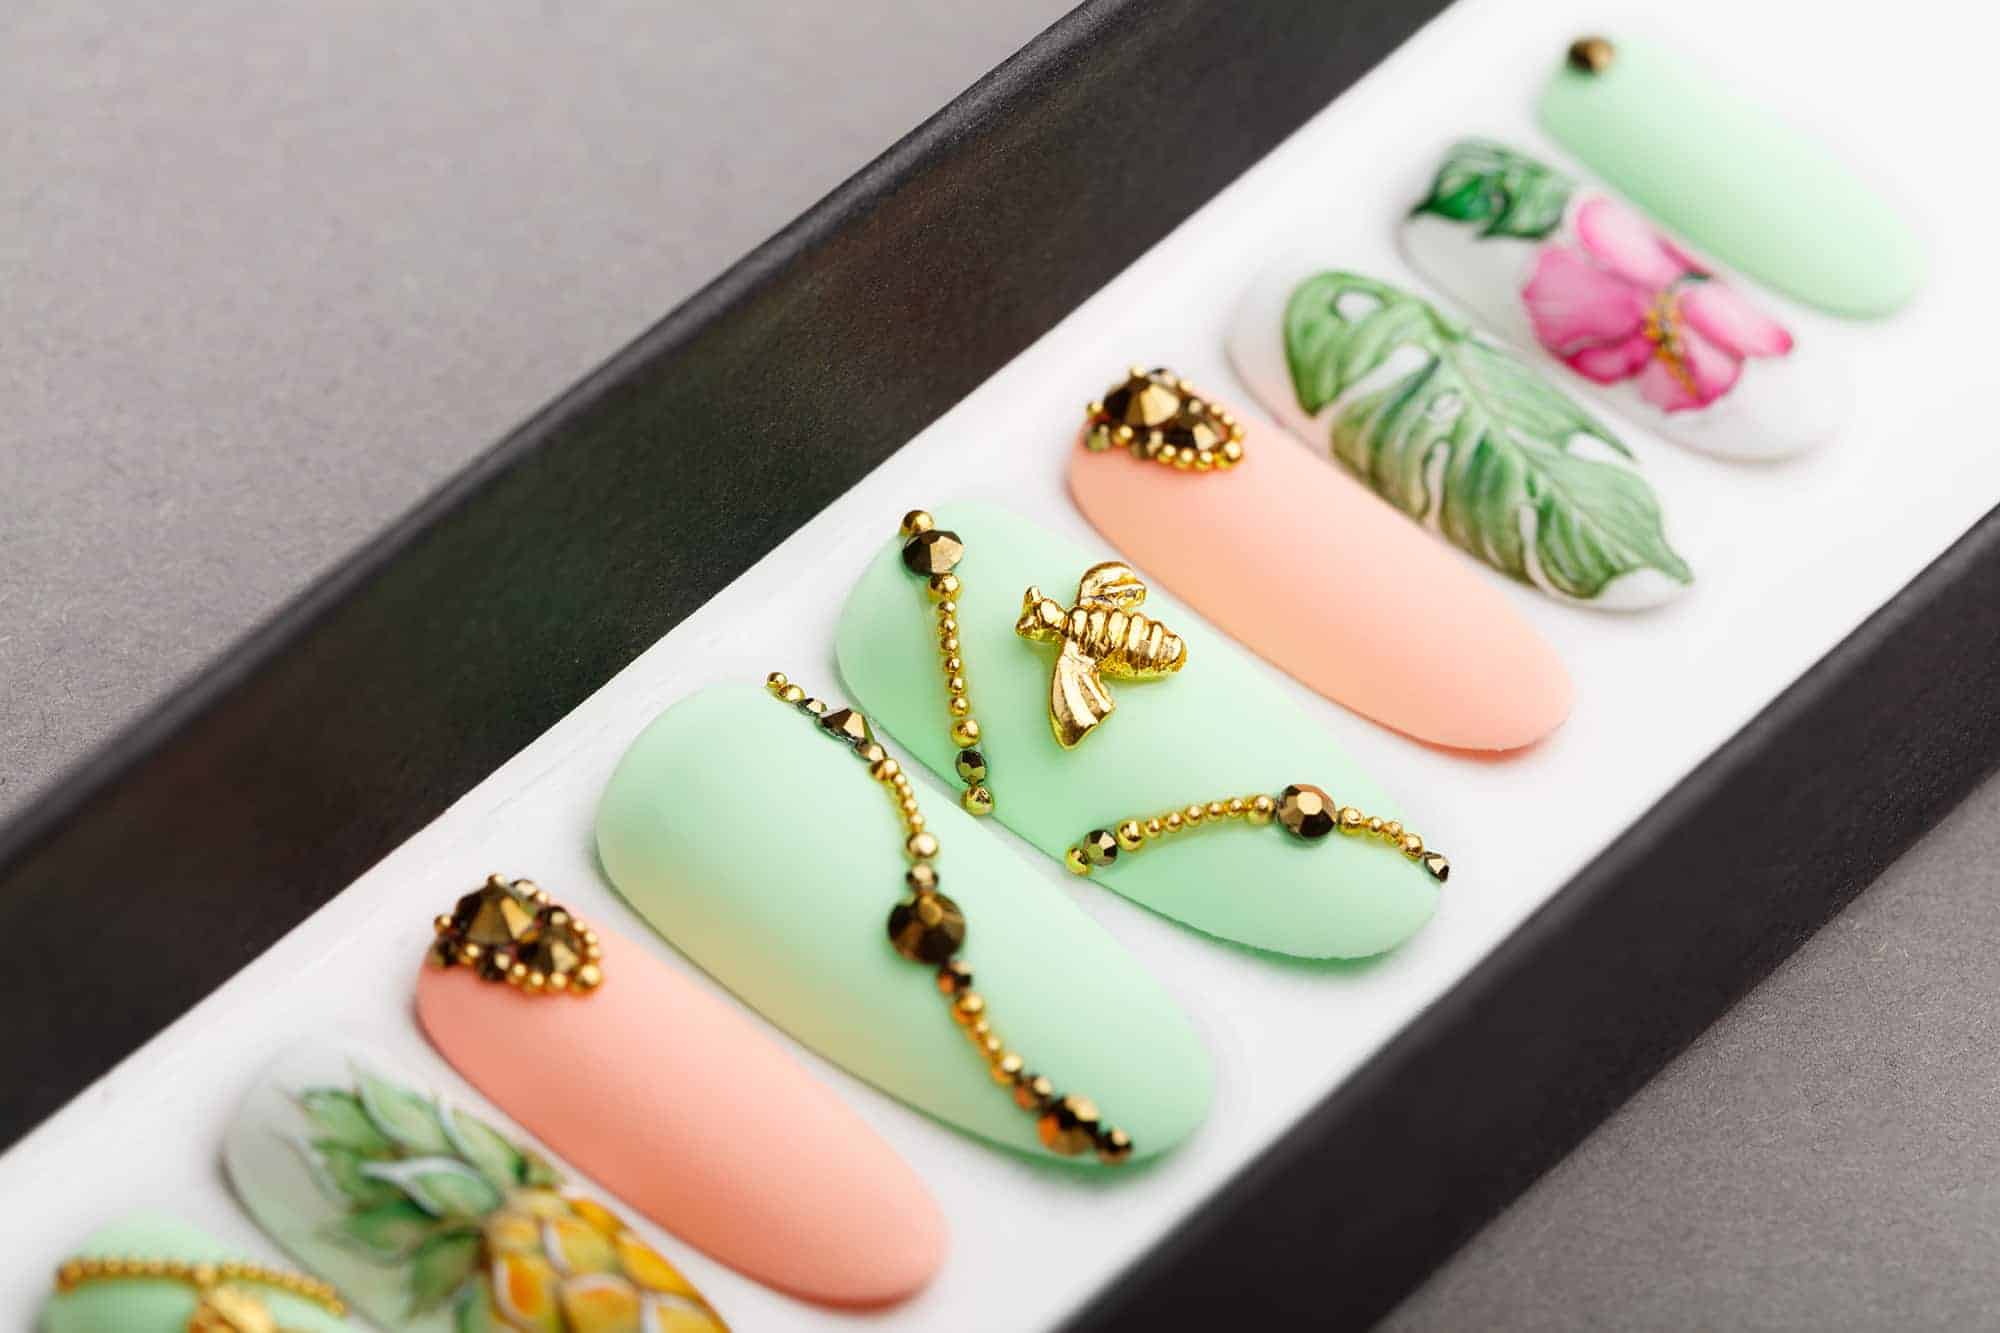 Pineapple, Bee and Tropics Press on Nails with Swarovski Crystals | Fake Nails | False Nails | Glue On Nails | Disney | Hand painted